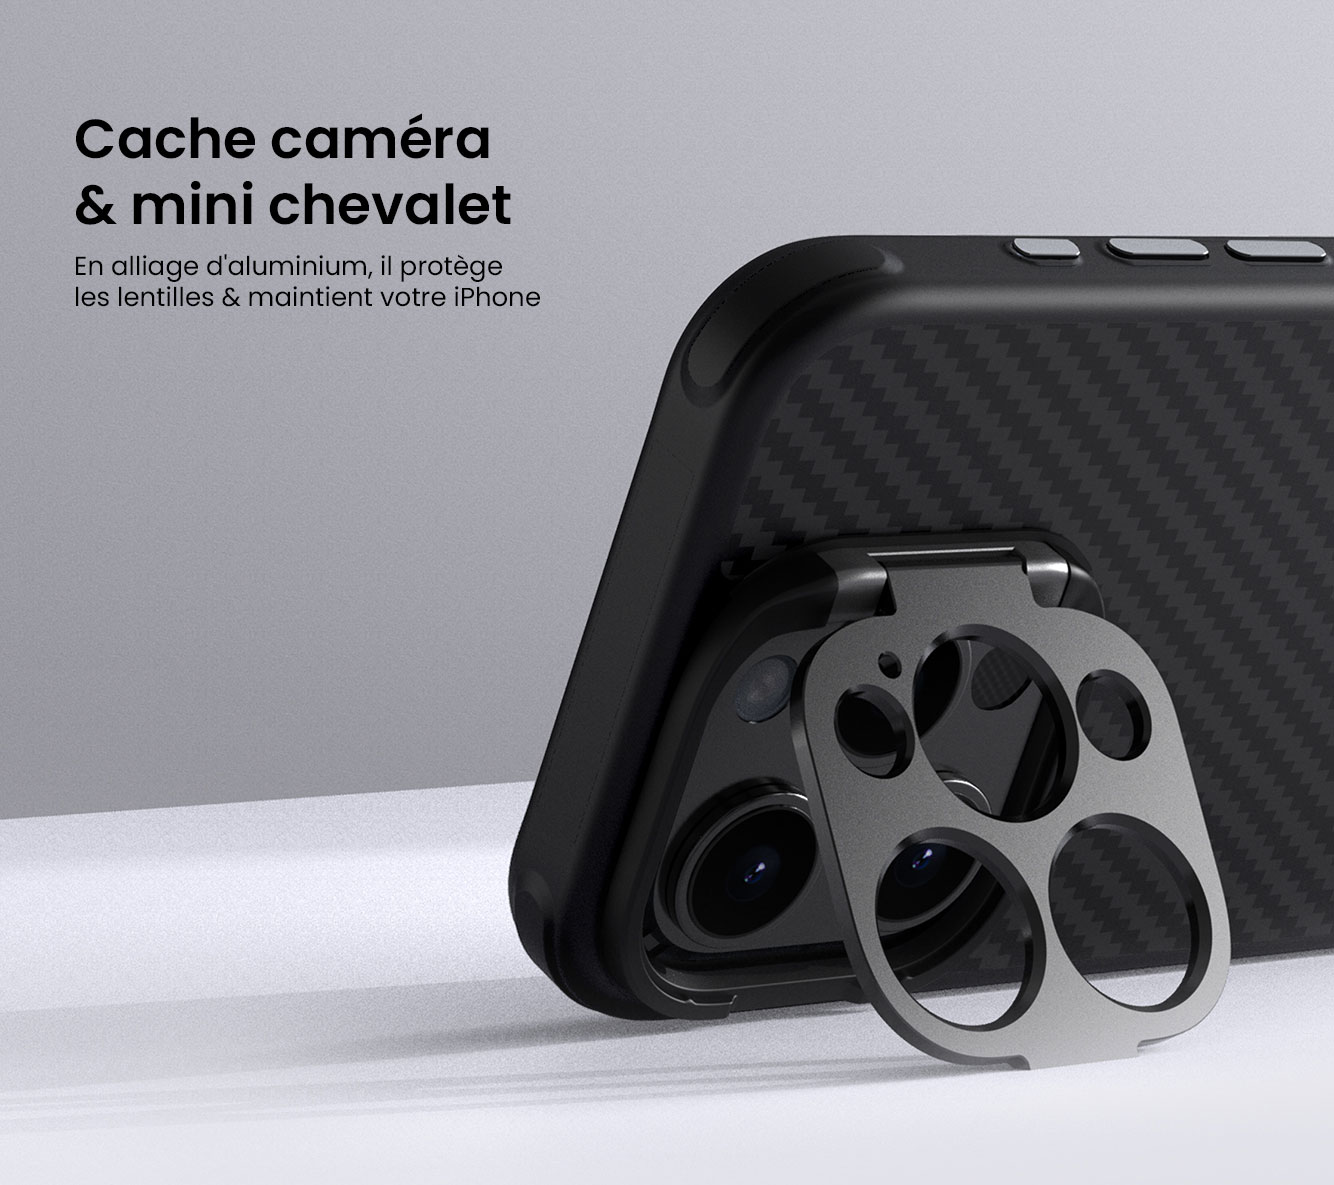 Coque MagSafe NILLKIN CarboProp En Fibre D'Aramide (Kevlar) pour iPhone 15 Pro